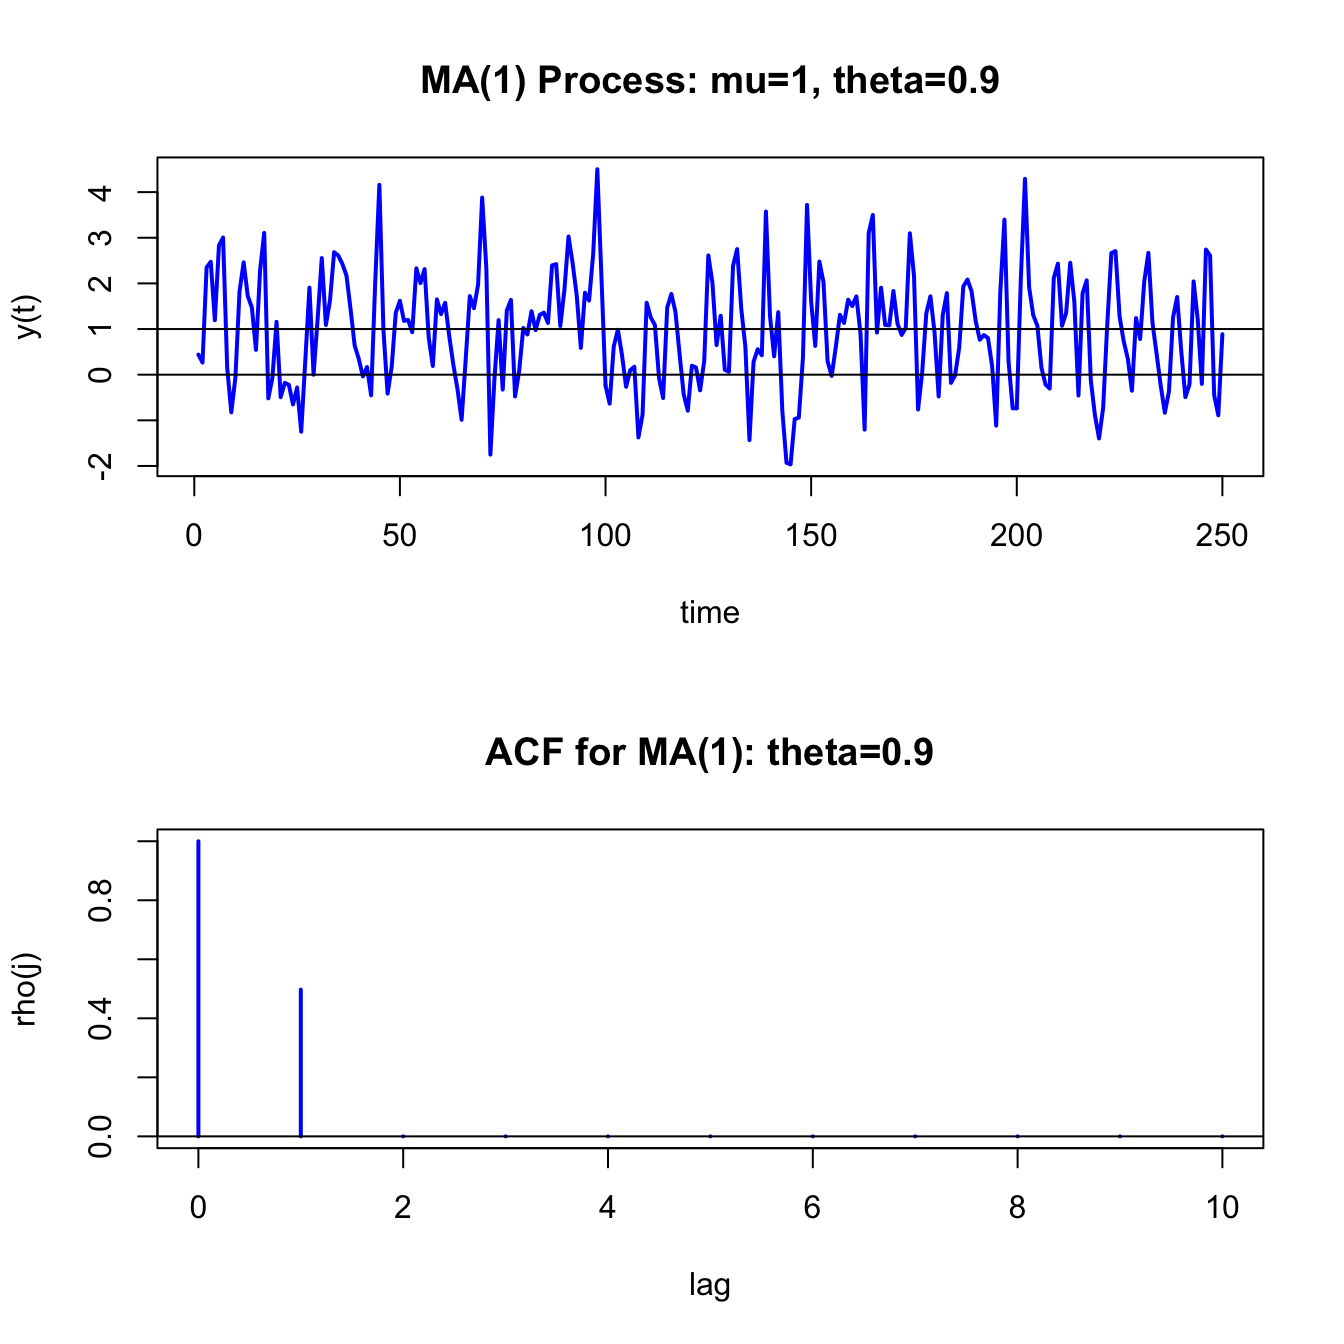 Simulated values and theoretical ACF from MA(1) process with $\mu=1$, $\theta=0.9$ and $\sigma_{\varepsilon}^{2}=1$.